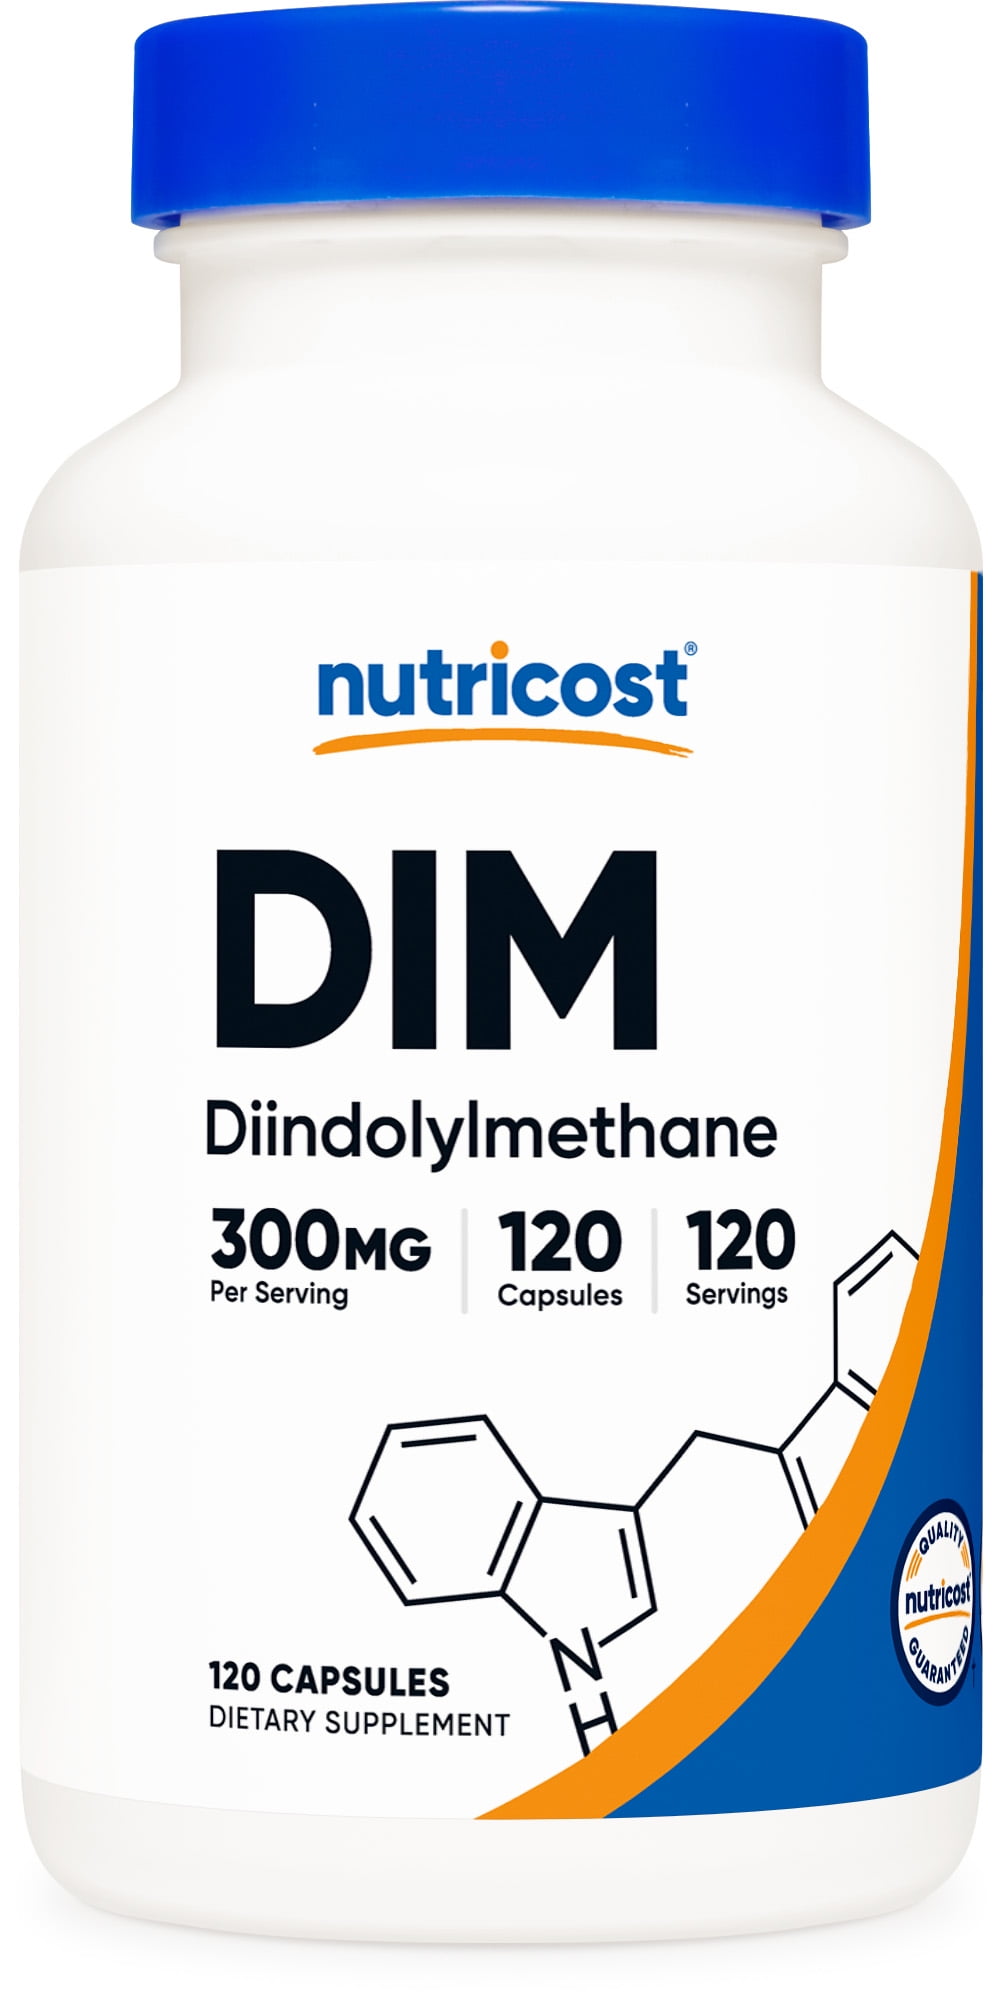 Nutricost DIM (Diindolylmethane) Supplement 300mg, 120 Capsules